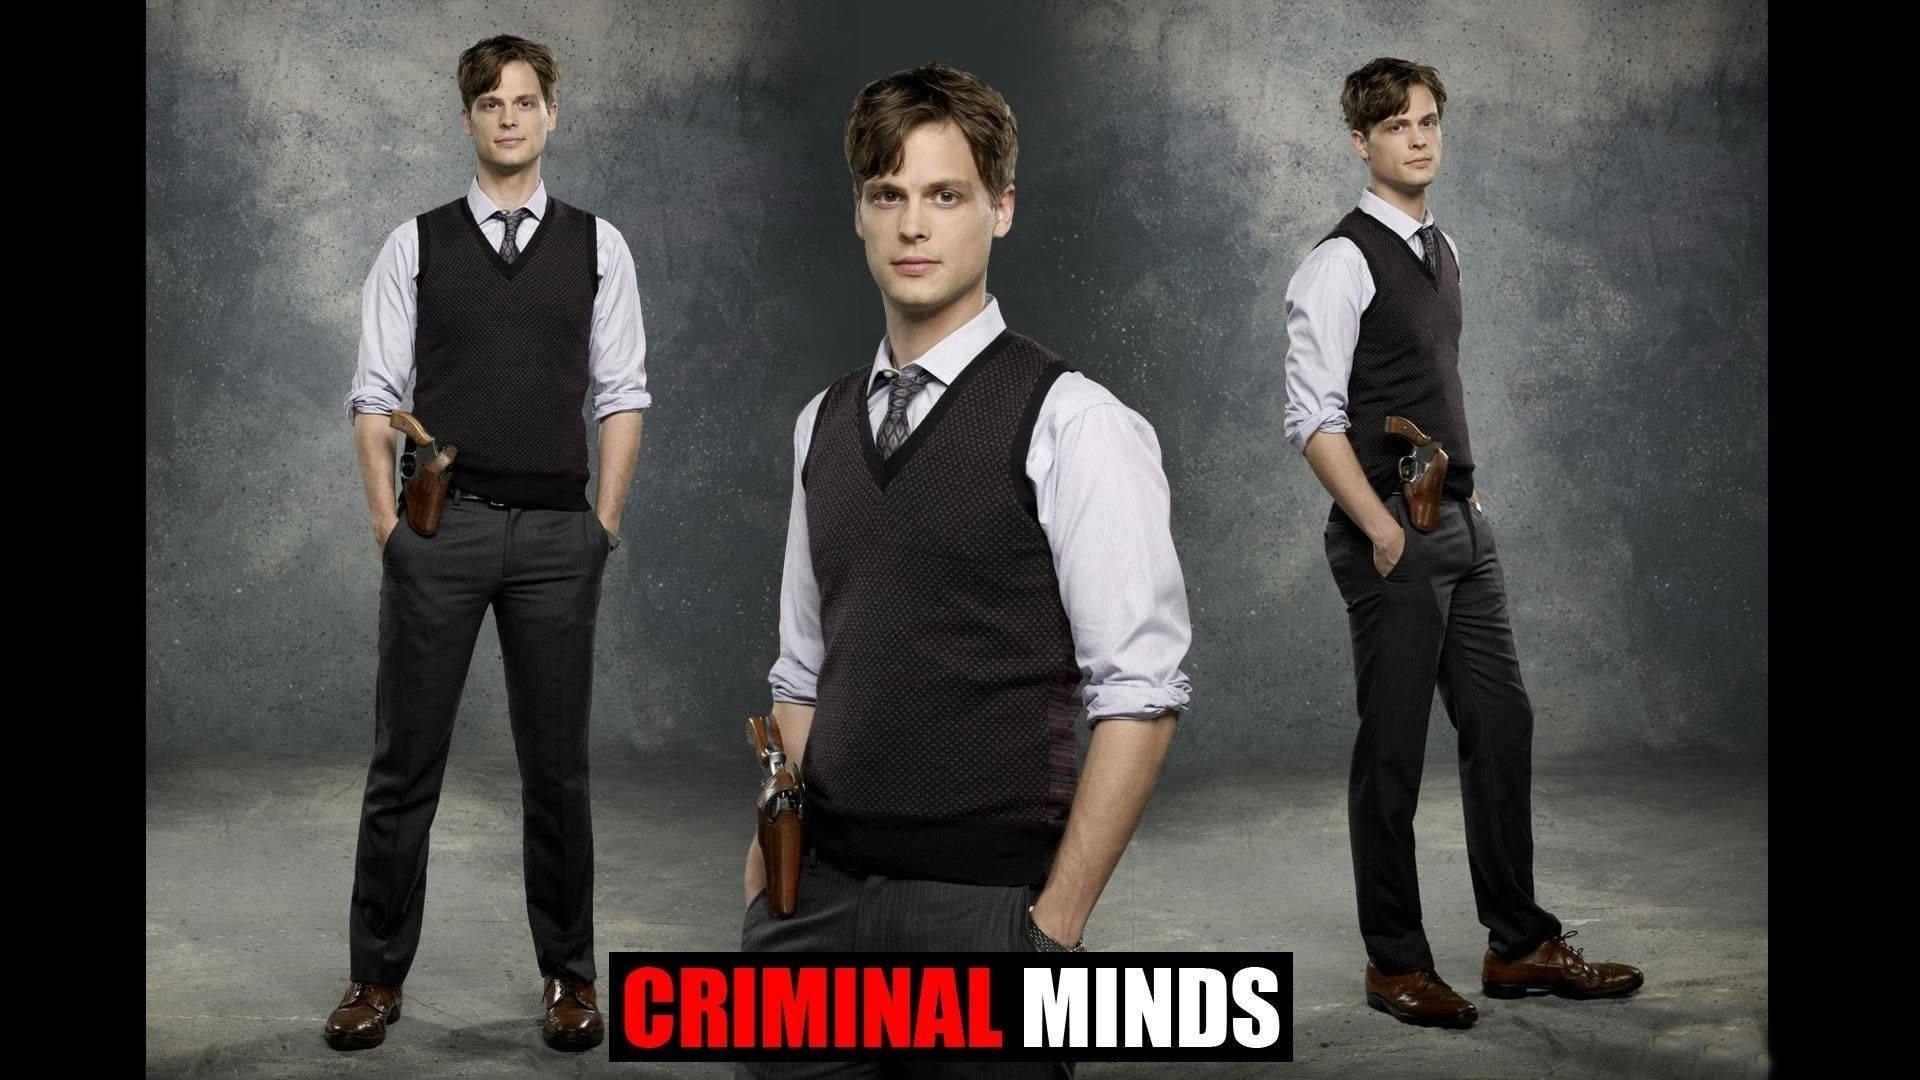 Matthew Gray Gubler's Pensive Stare In Criminal Minds